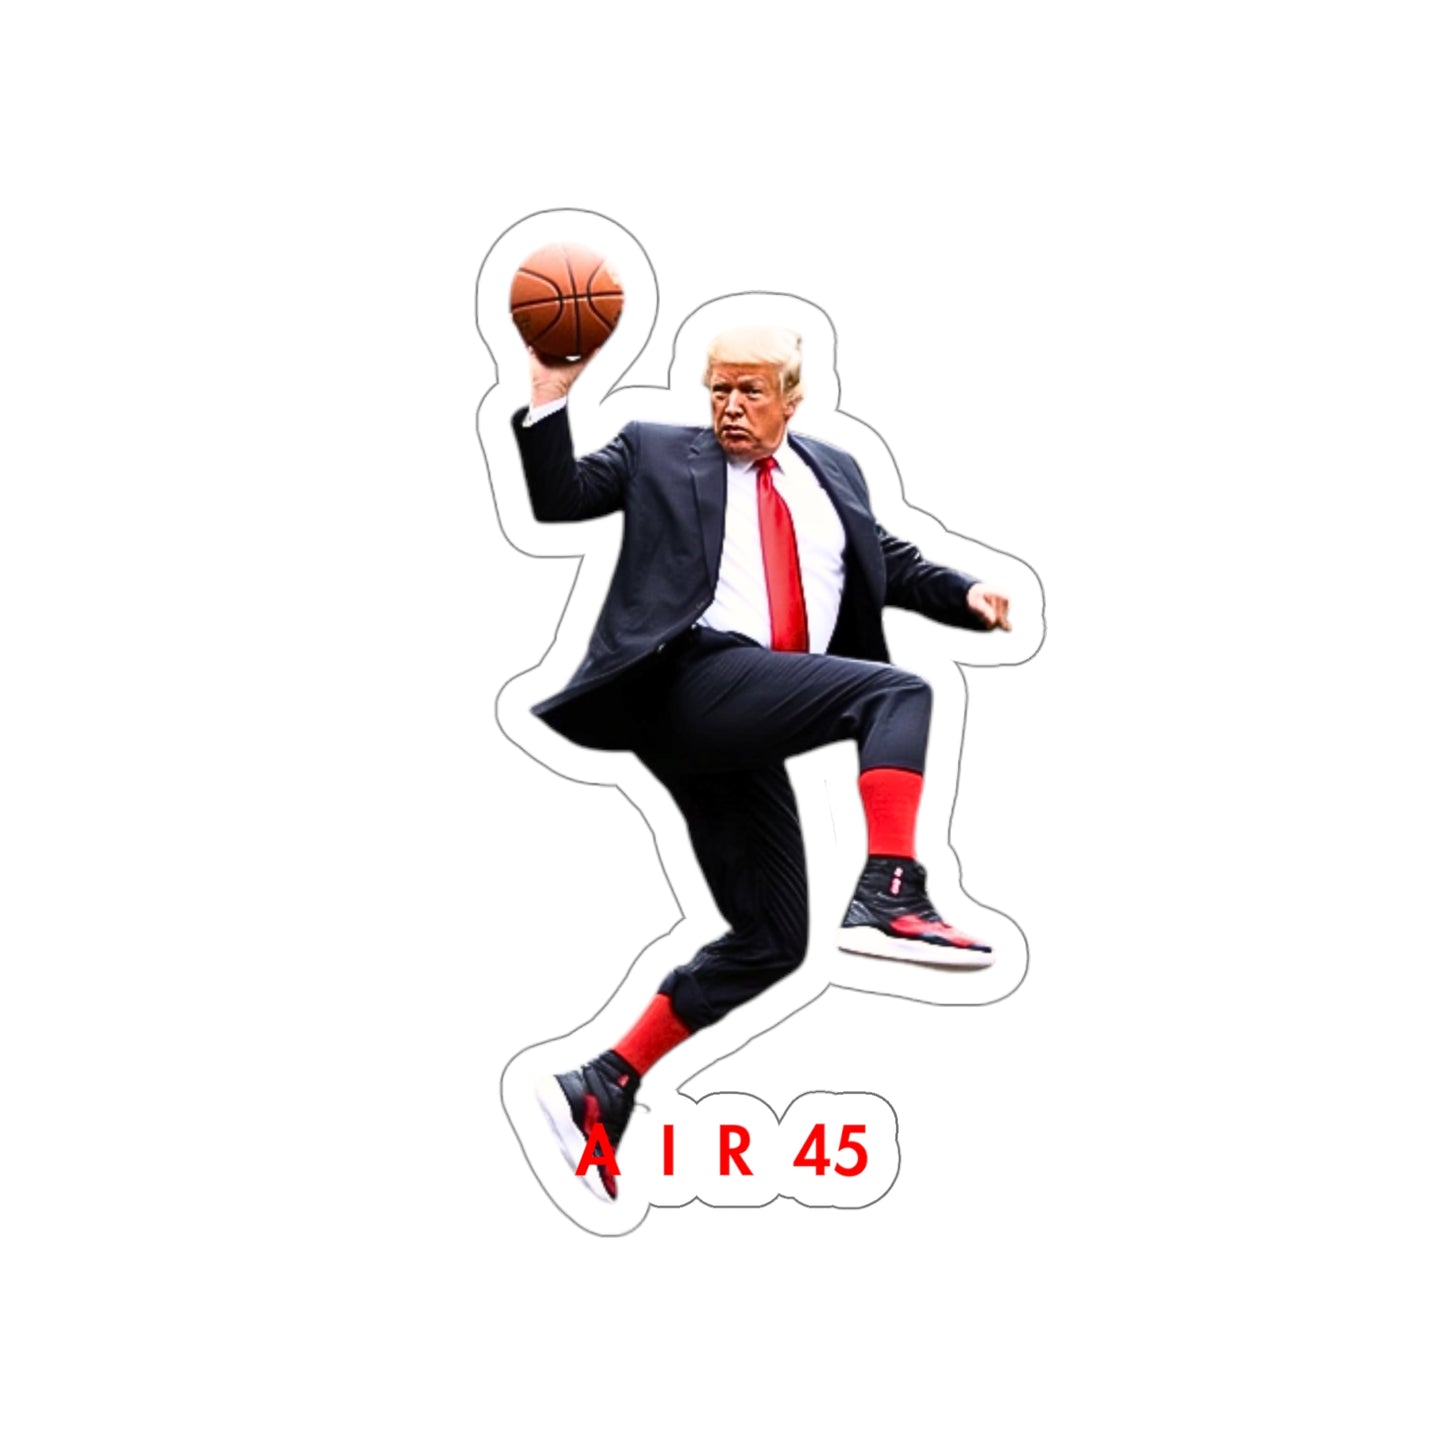 Air DT Donald Trump Die-Cut Stickers